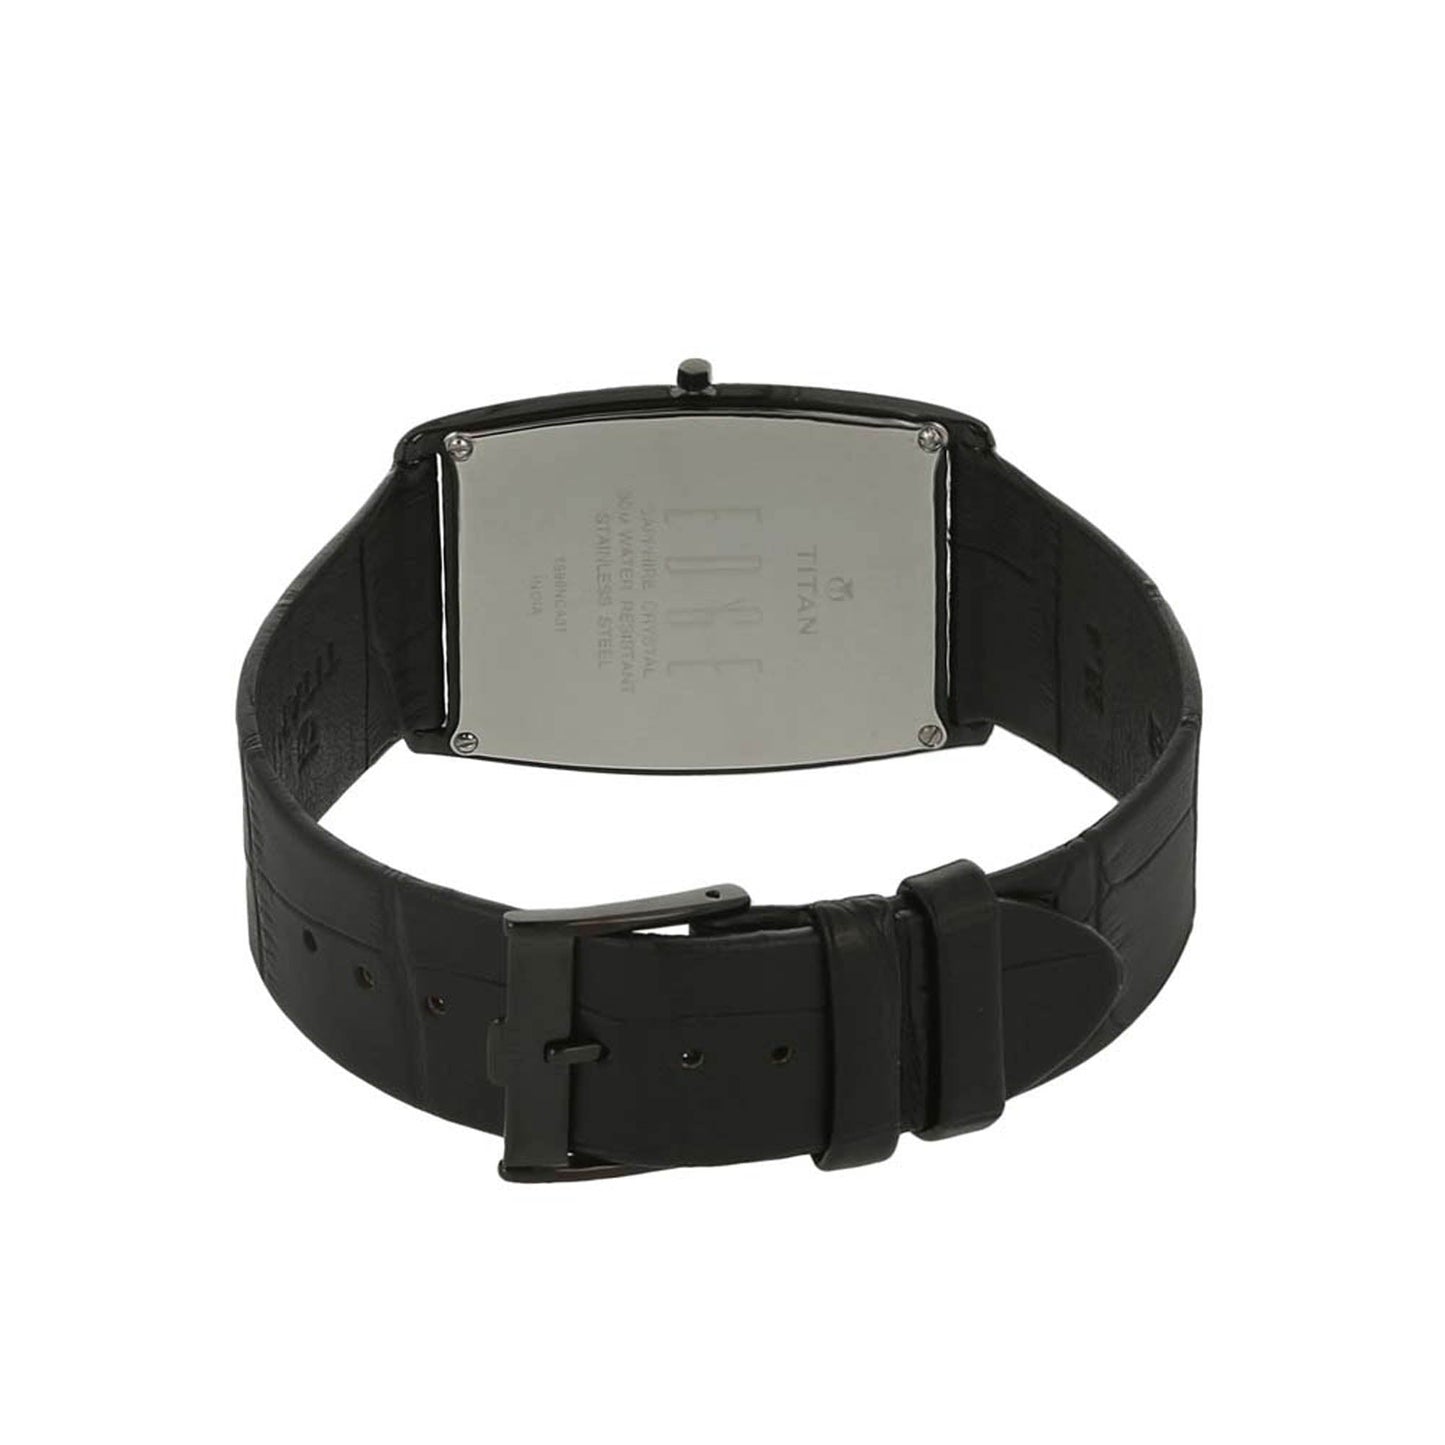 Titan Edge Black Dial Analog Leather Strap watch for Men